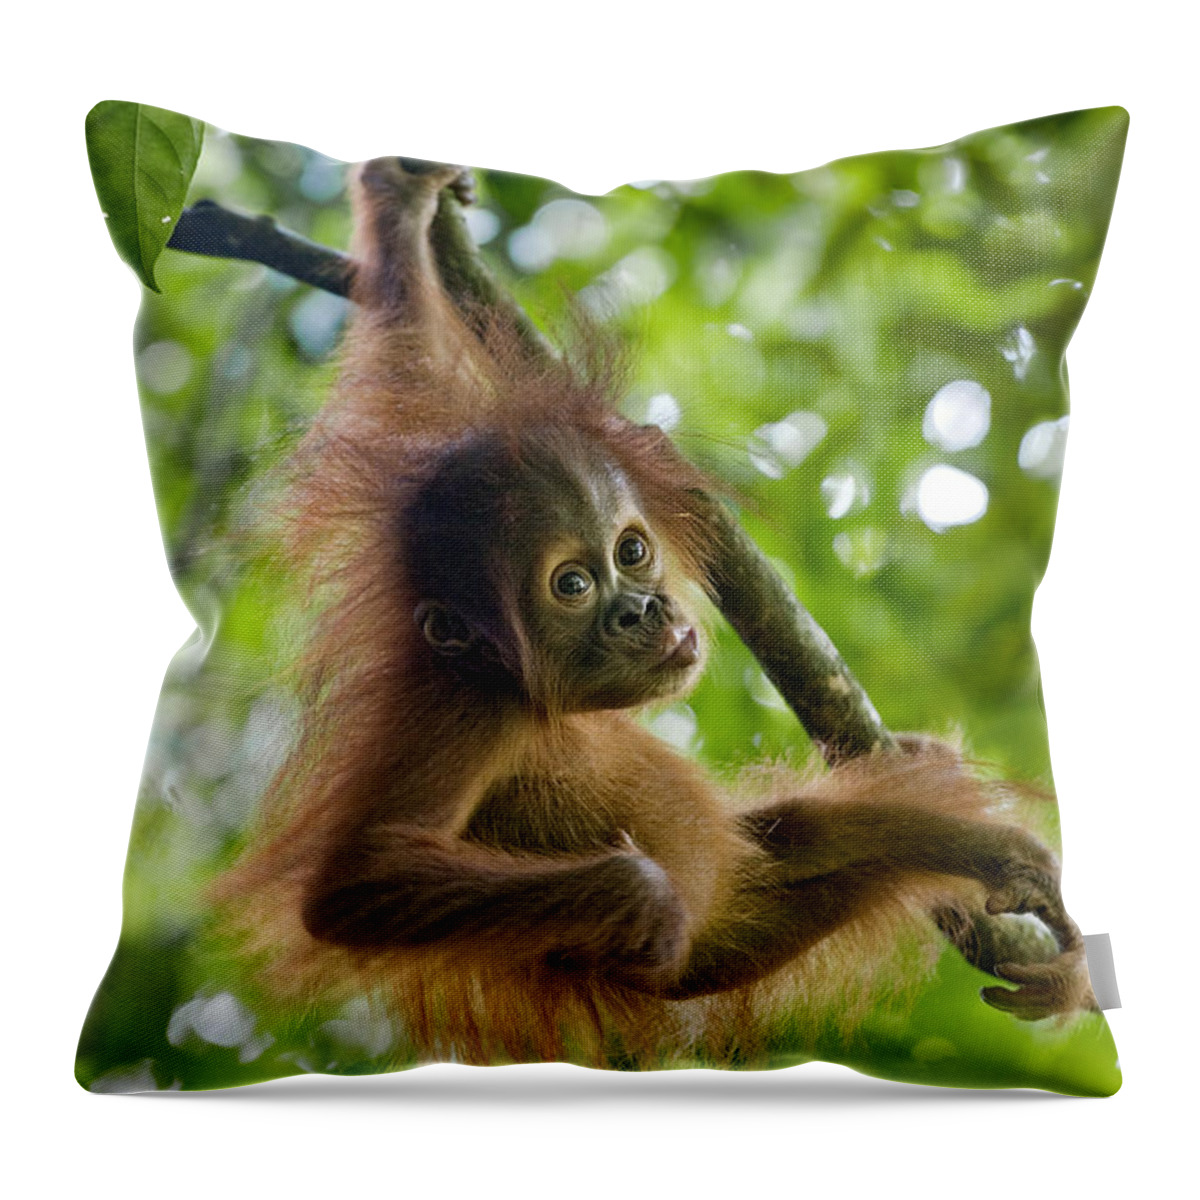 00443970 Throw Pillow featuring the photograph Sumatran Orangutan Baby #1 by Suzi Eszterhas